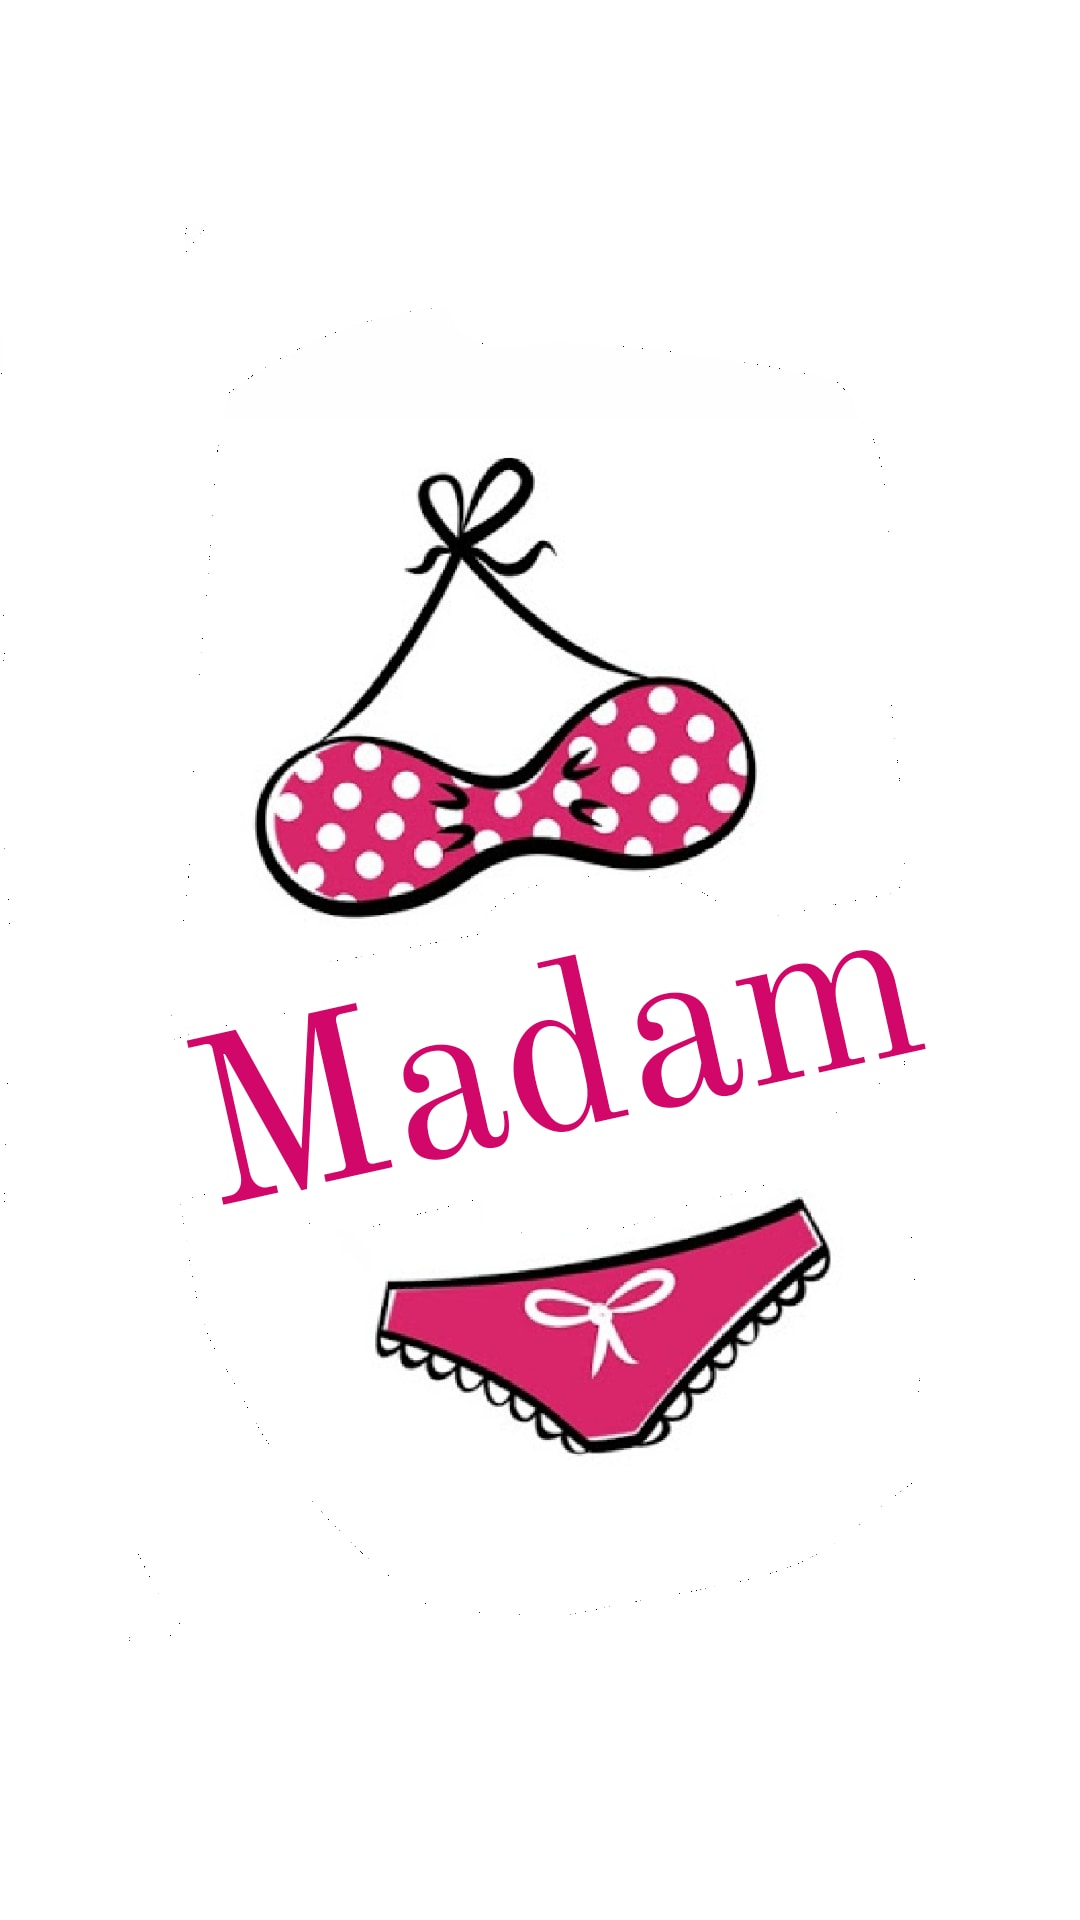 Madam store